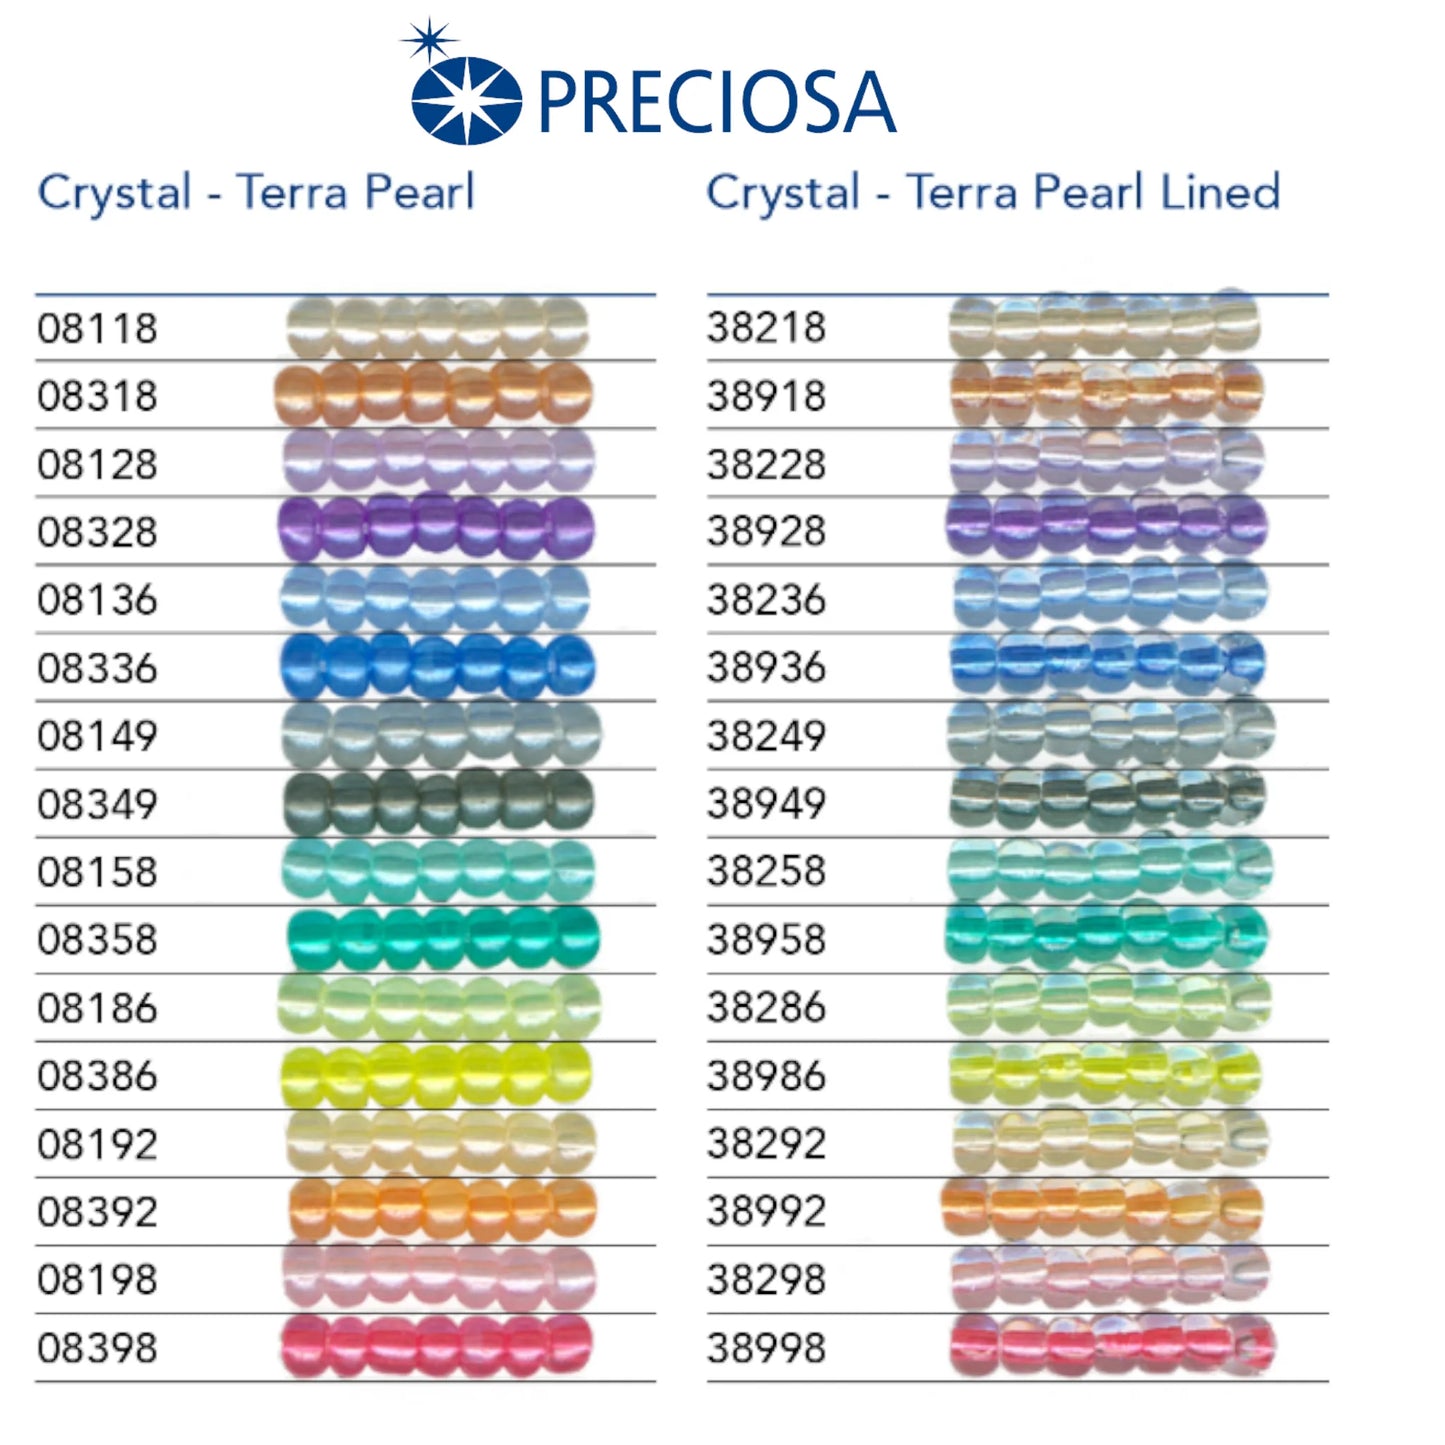 08192 Czech seed beads PRECIOSA Rocailles 10/0 peach. Crystal - Terra Pearl.